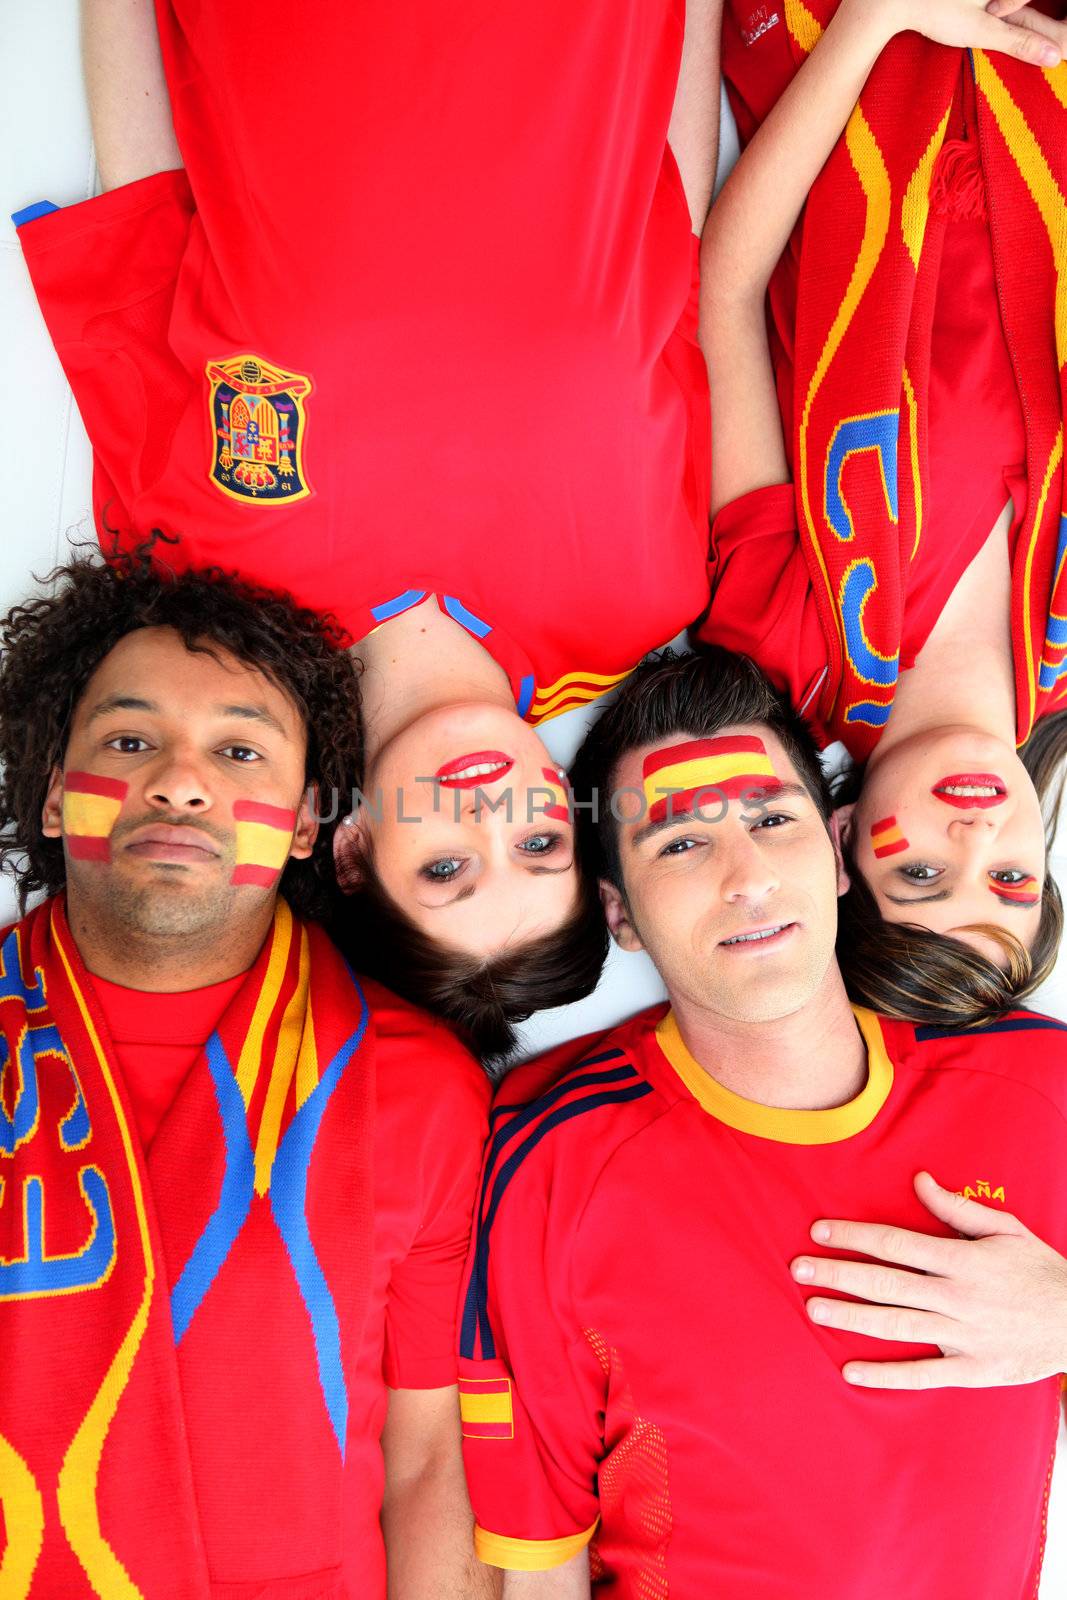 Spanish football fans by phovoir